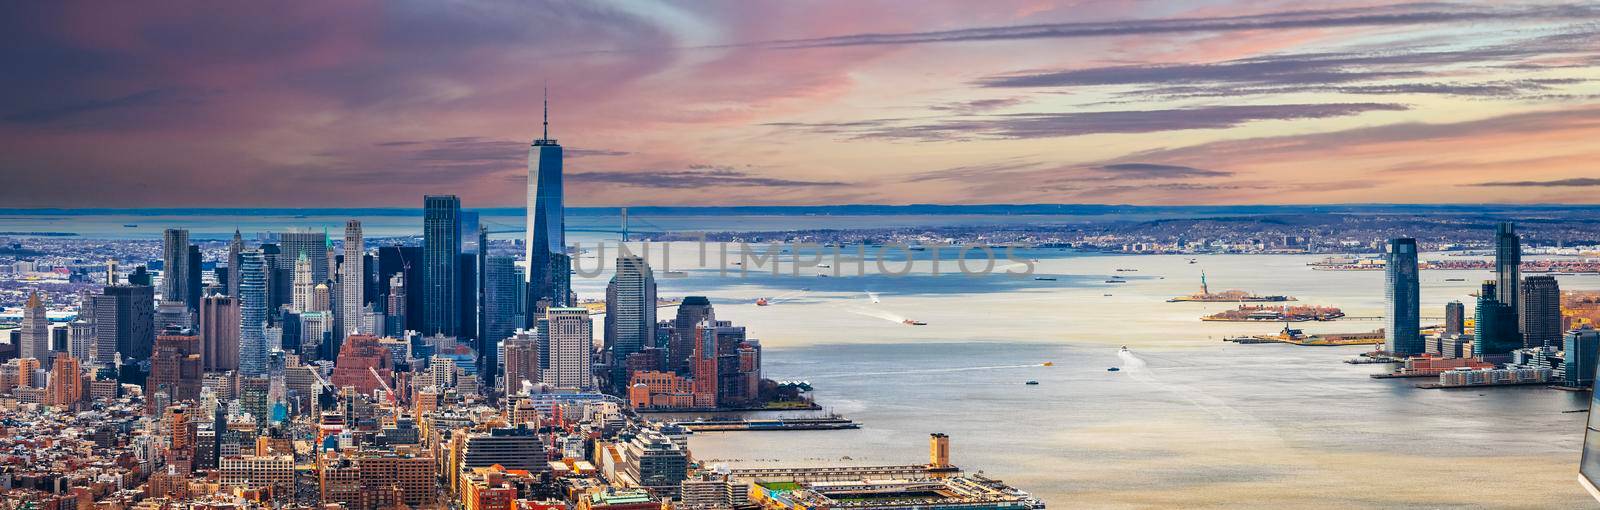 New York City and New Jersey skyline panoramic sunset view, United States of America